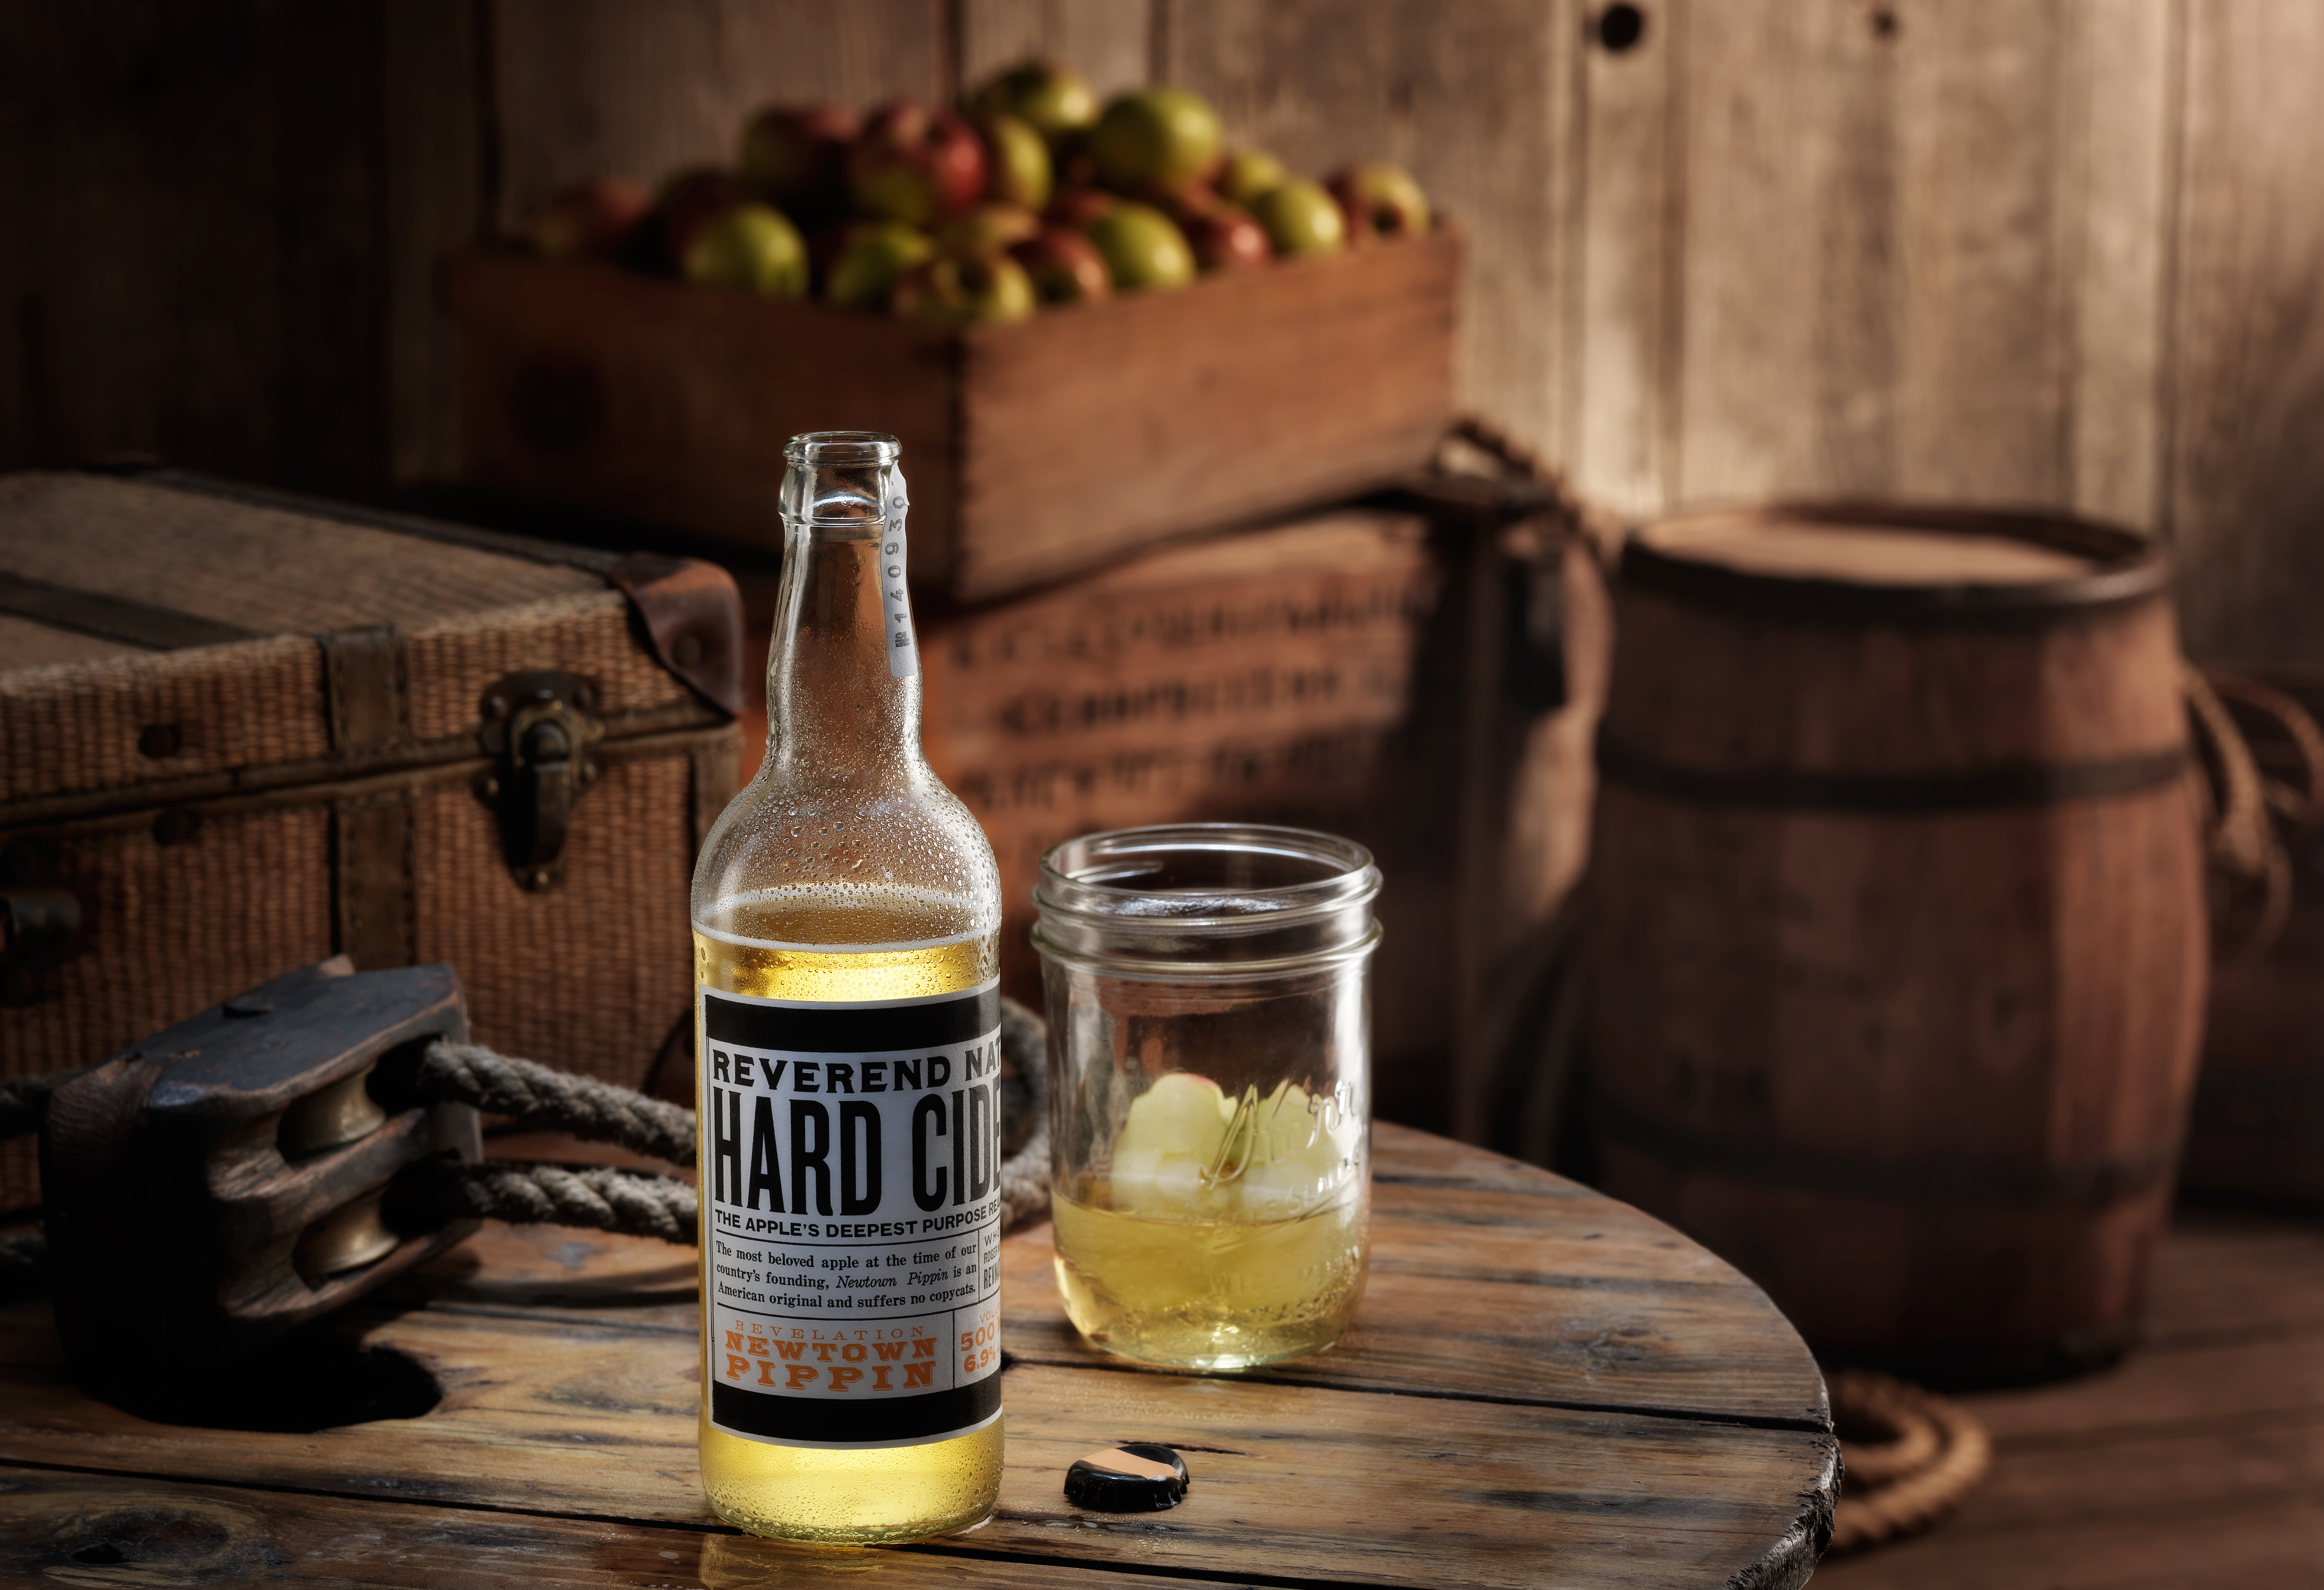 Studio 3 Drink Photography Reverend Nats Hard Cider on a Tabletop  — Studio 3, Inc.